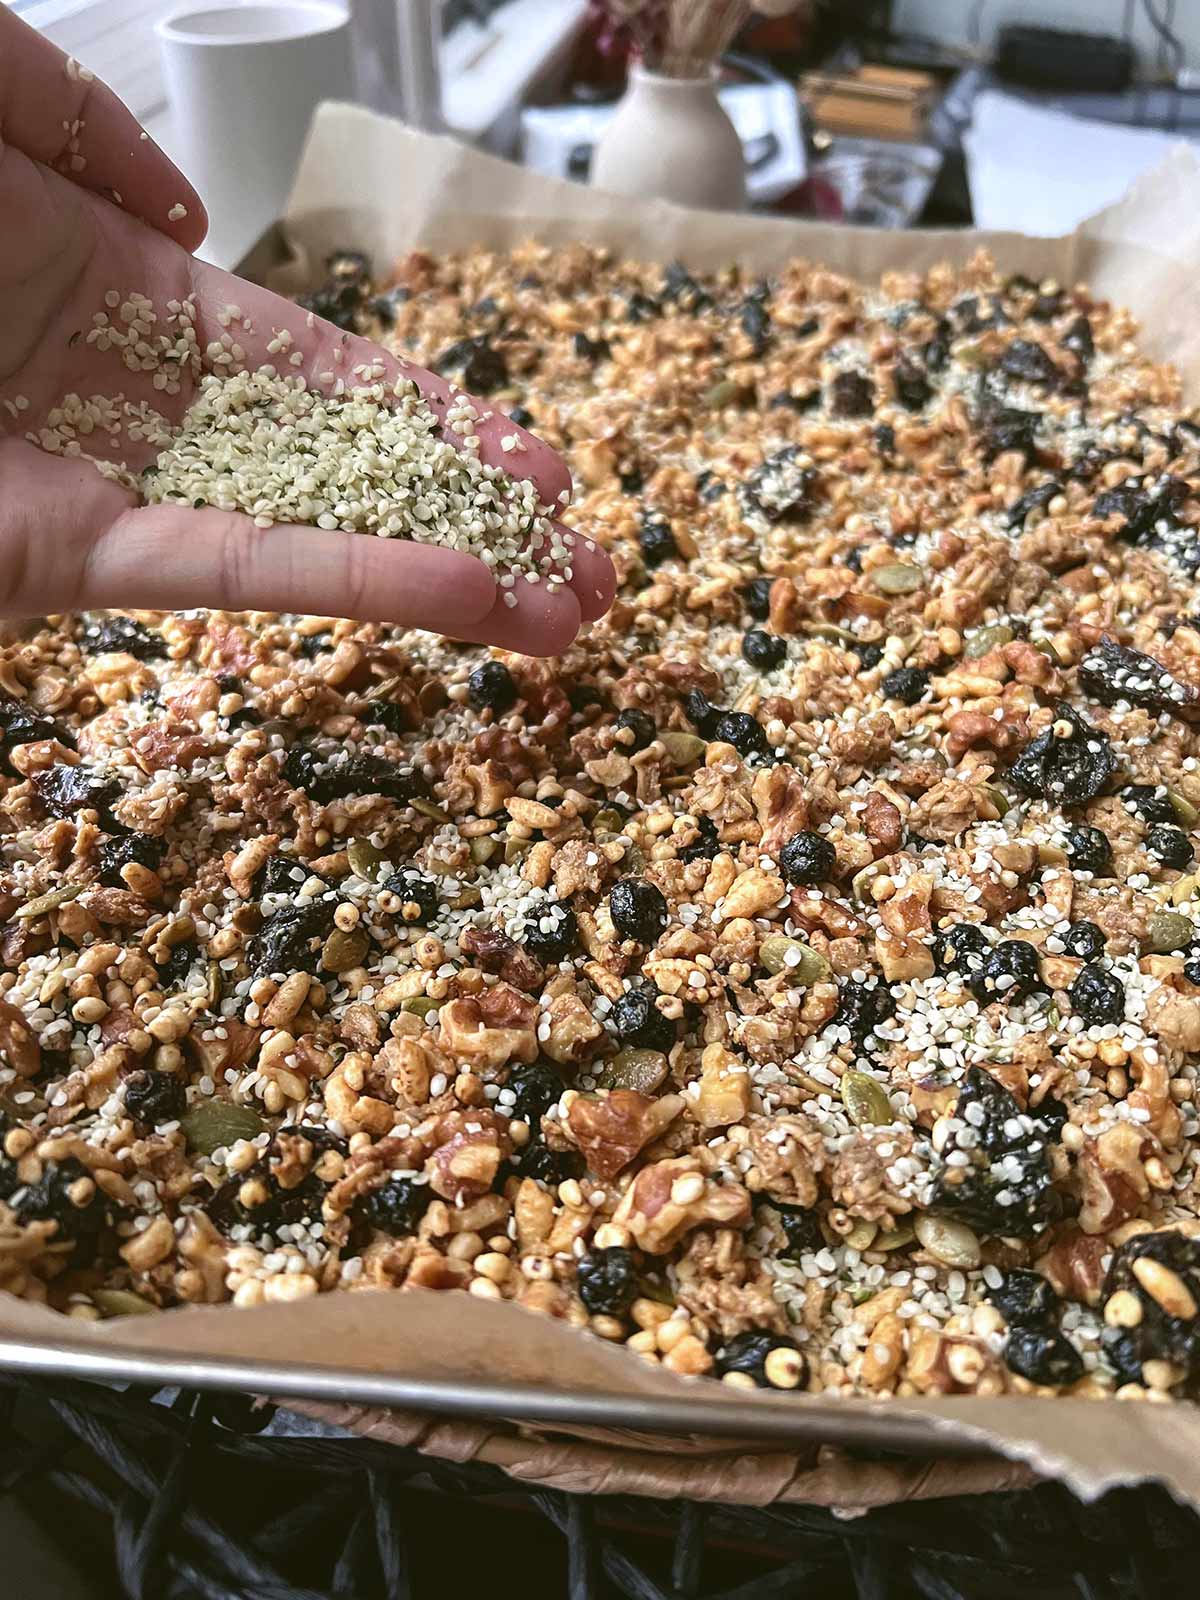 Adding hemp seeds to the baked granola.